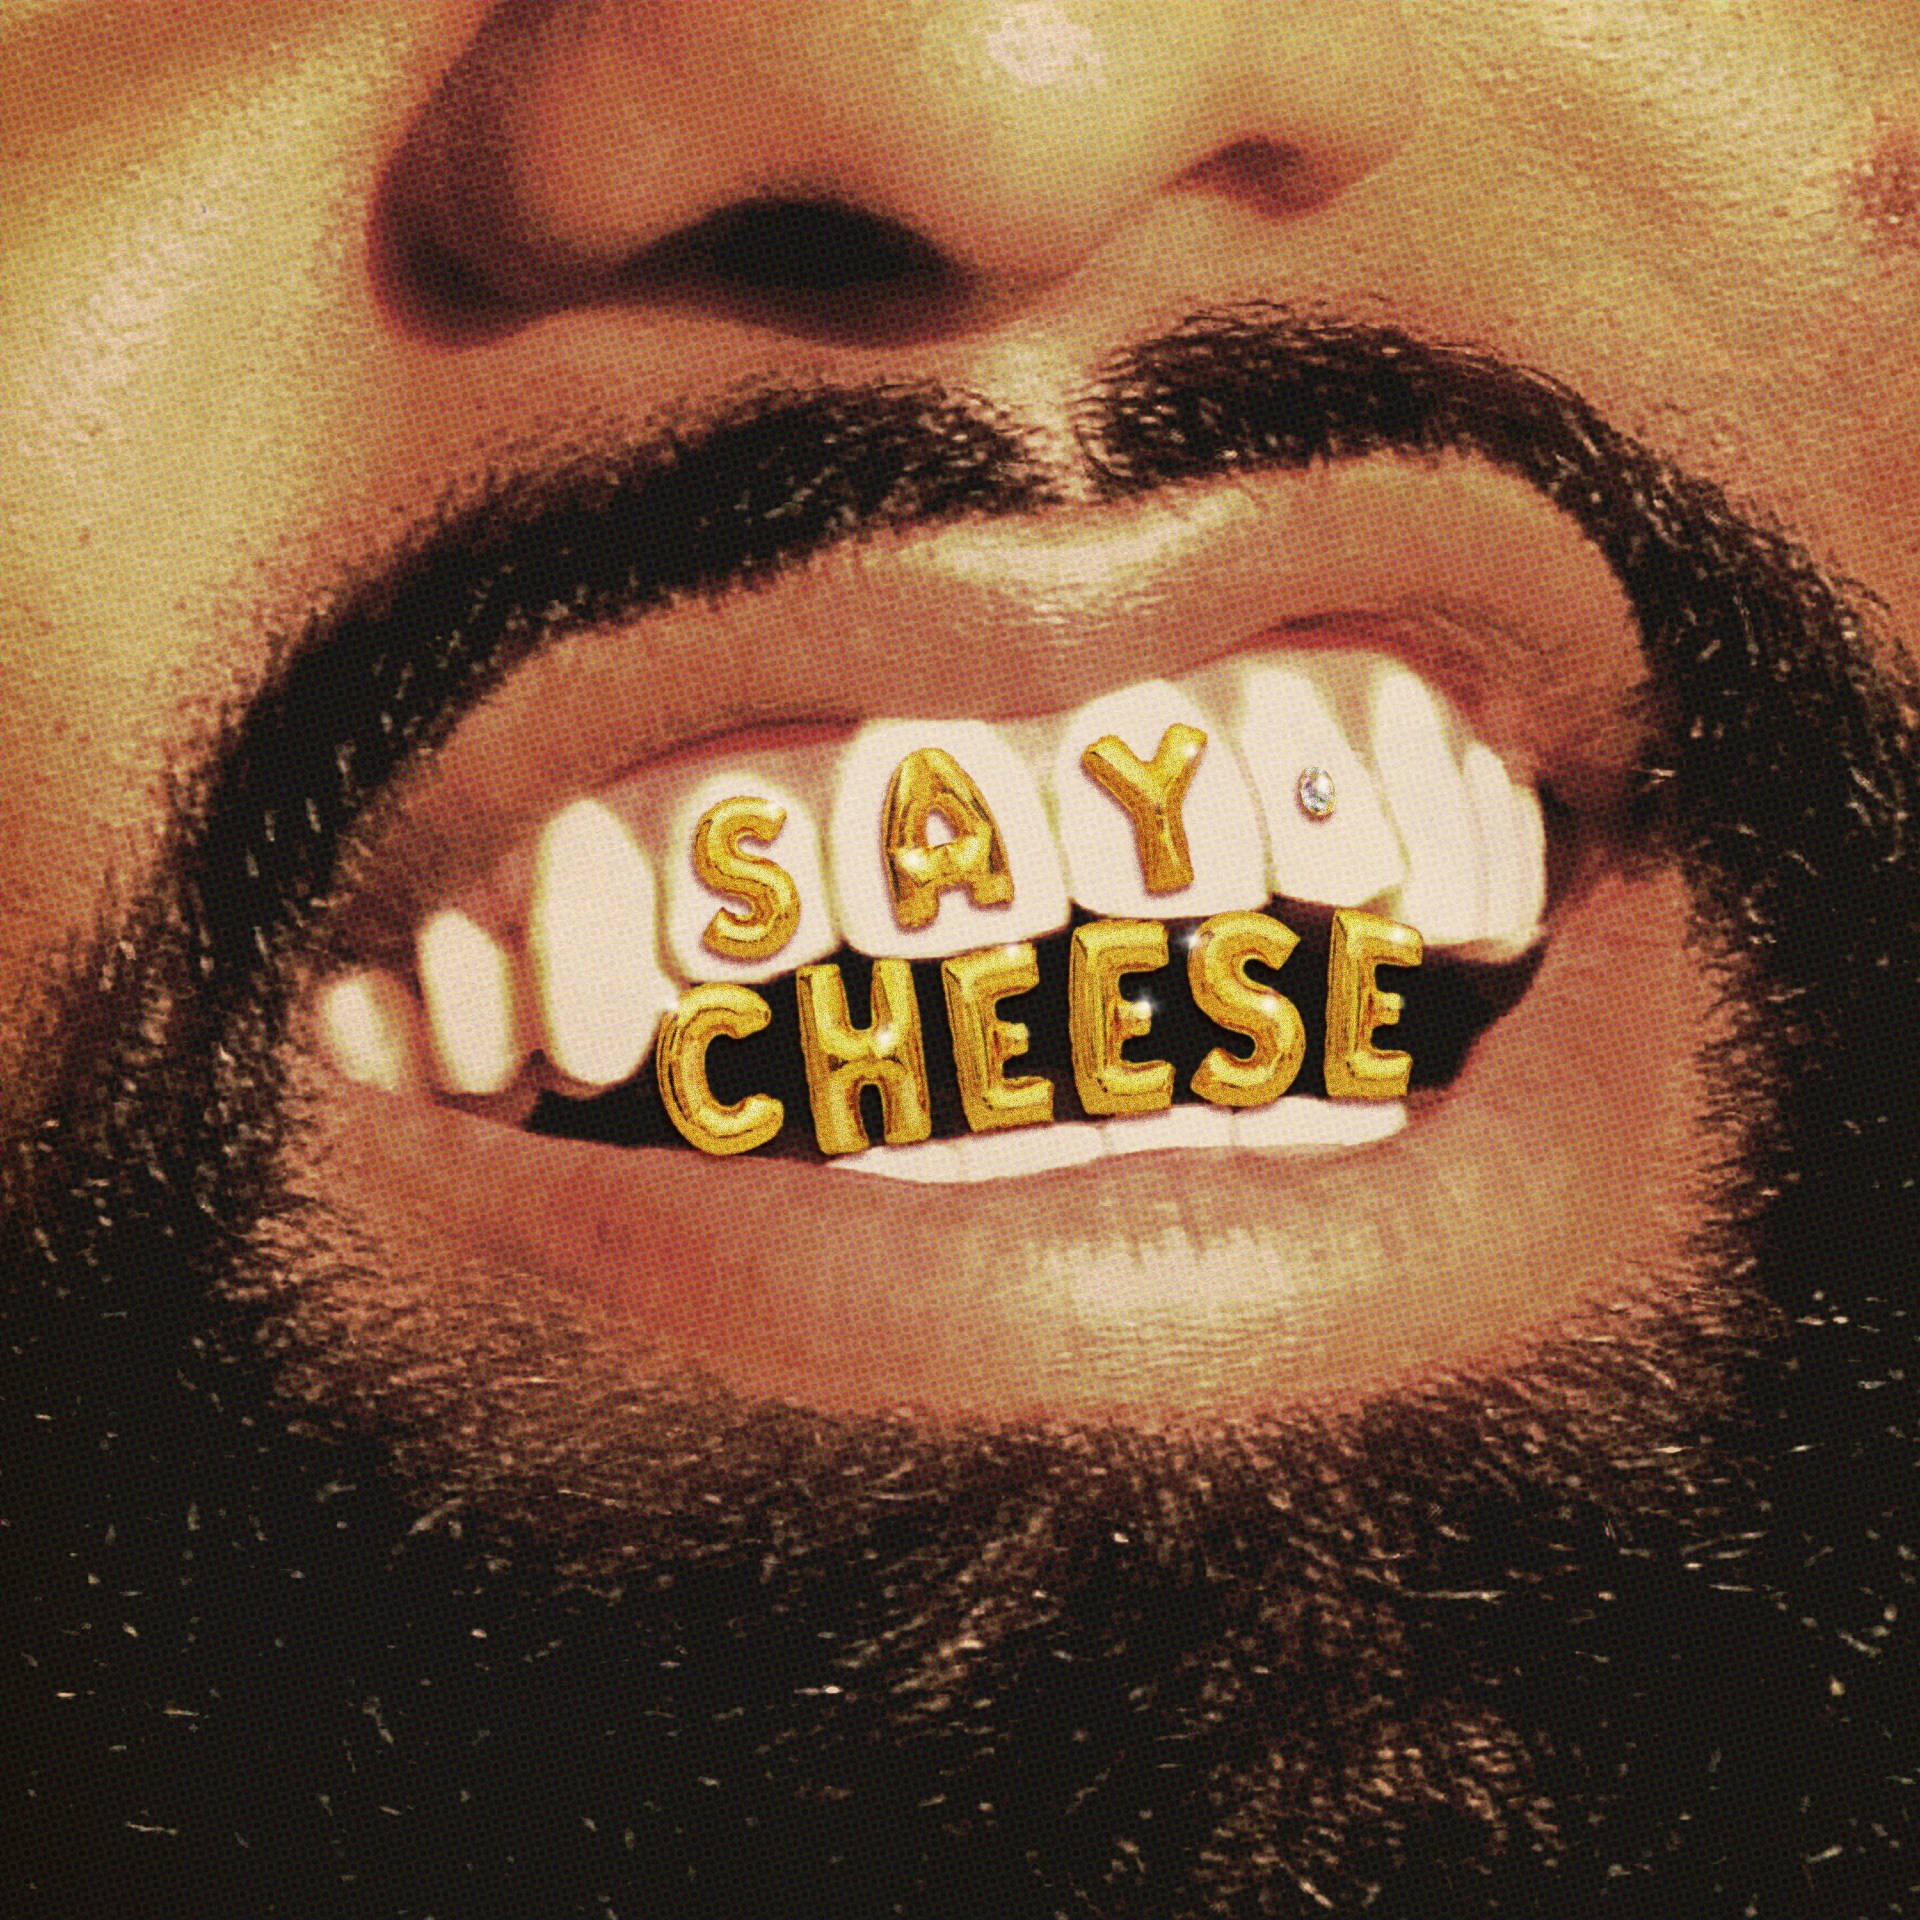 Paul Russell “Say Cheese” single artwork